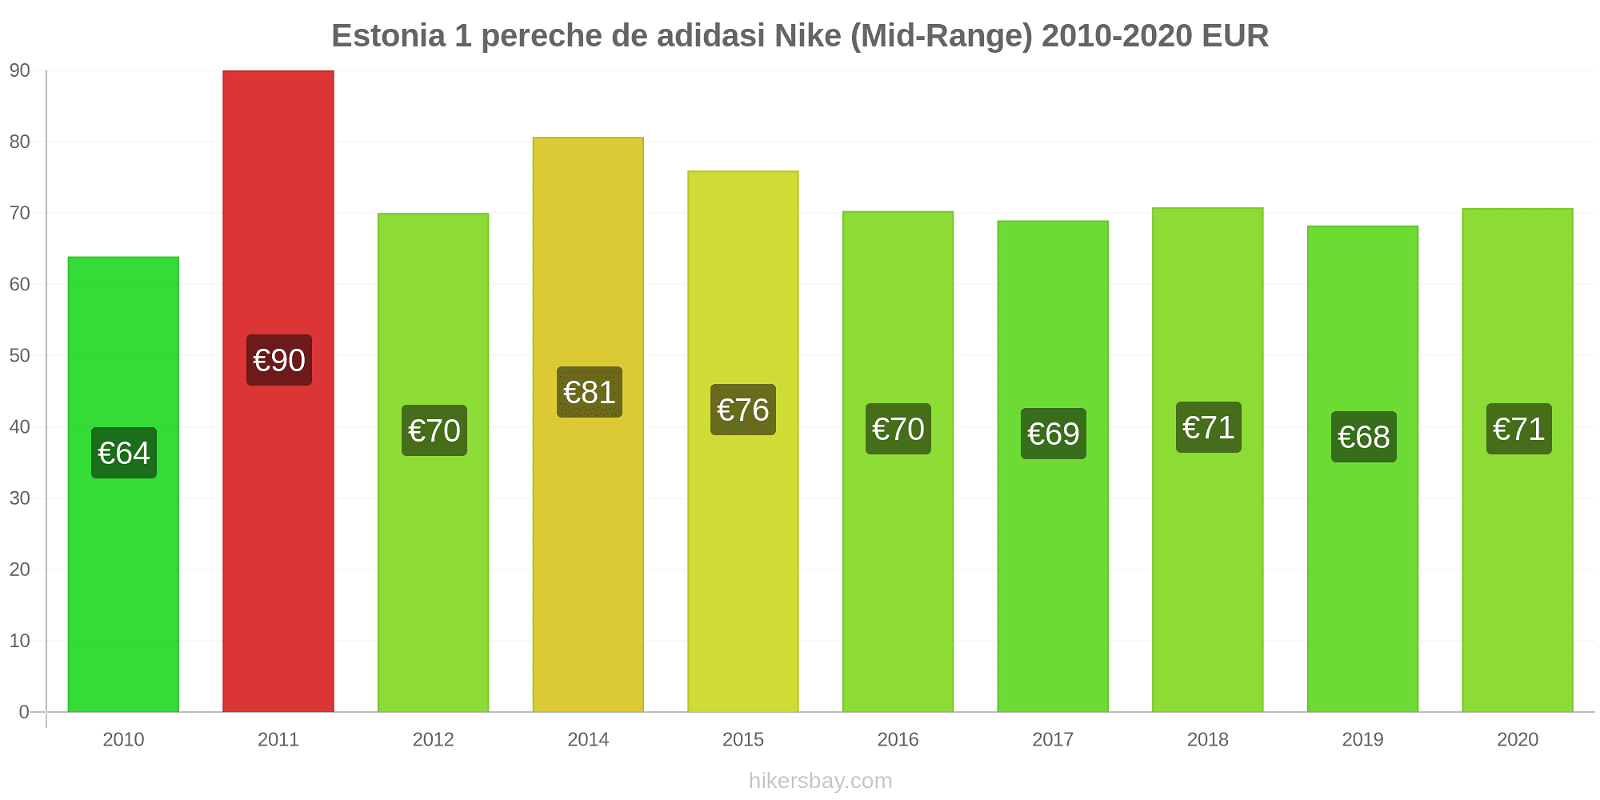 Estonia modificări de preț 1 pereche de adidasi Nike (Mid-Range) hikersbay.com